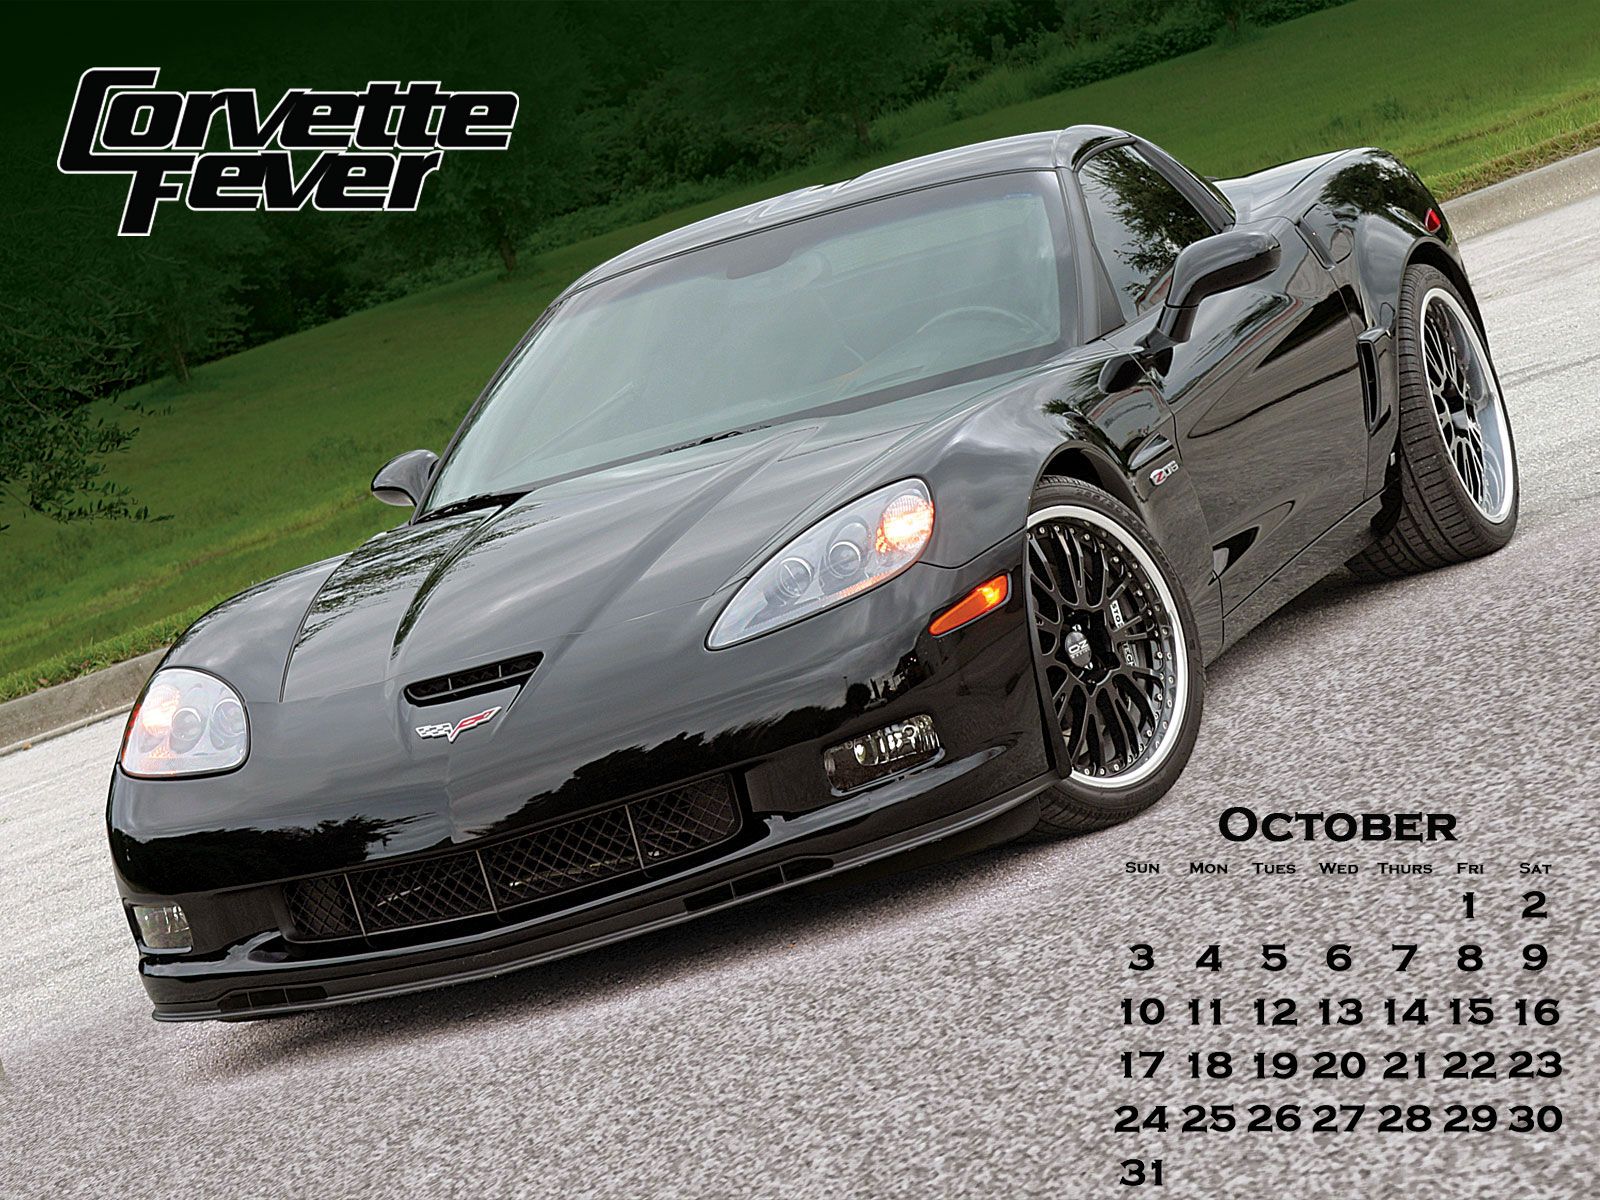 Thread Corvette Fevers 2010 October Calendar